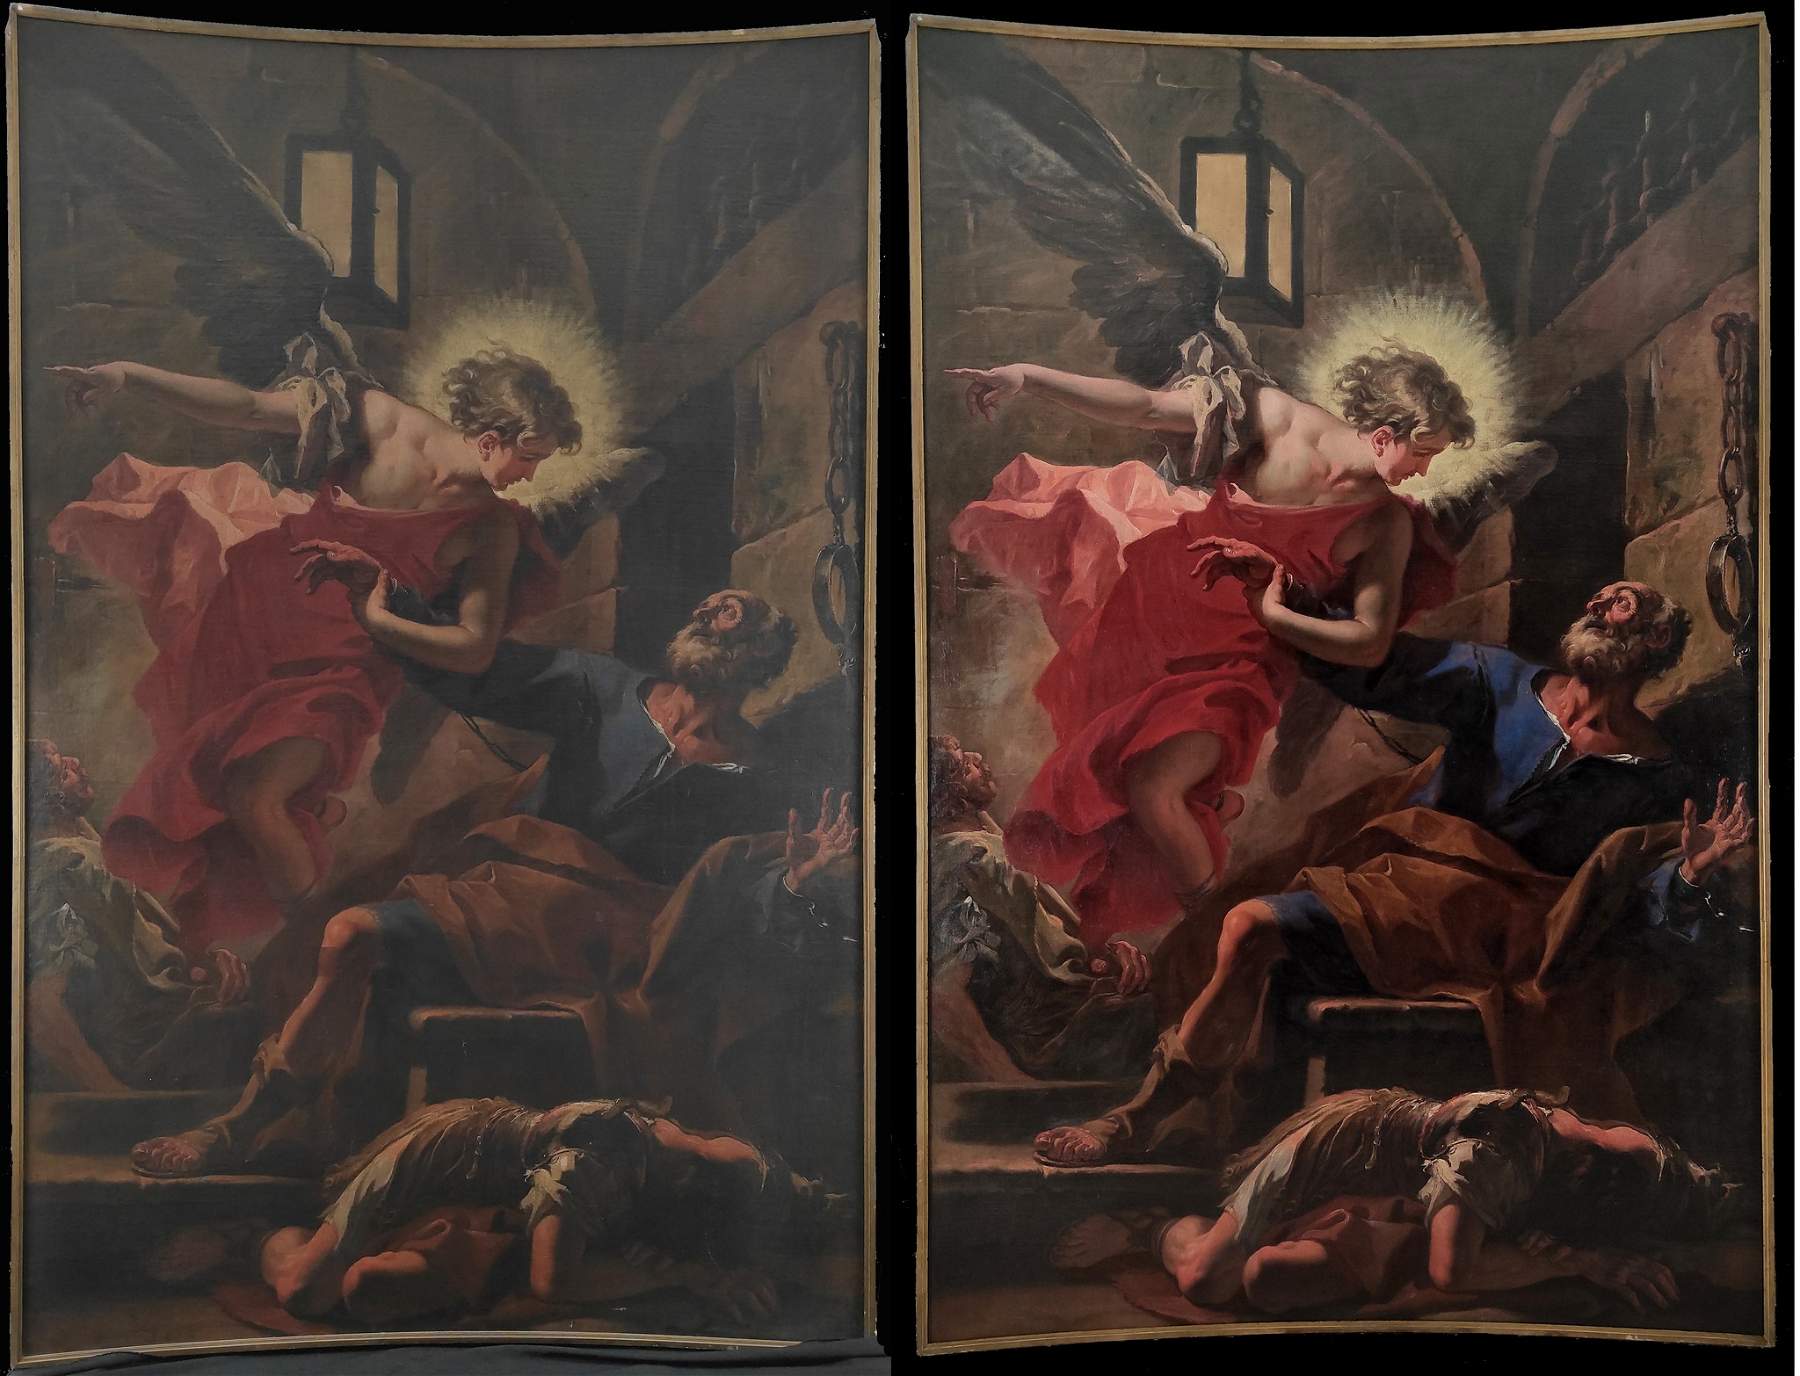 Bergamo, finishes the restoration of a monumental masterpiece by Sebastiano Ricci